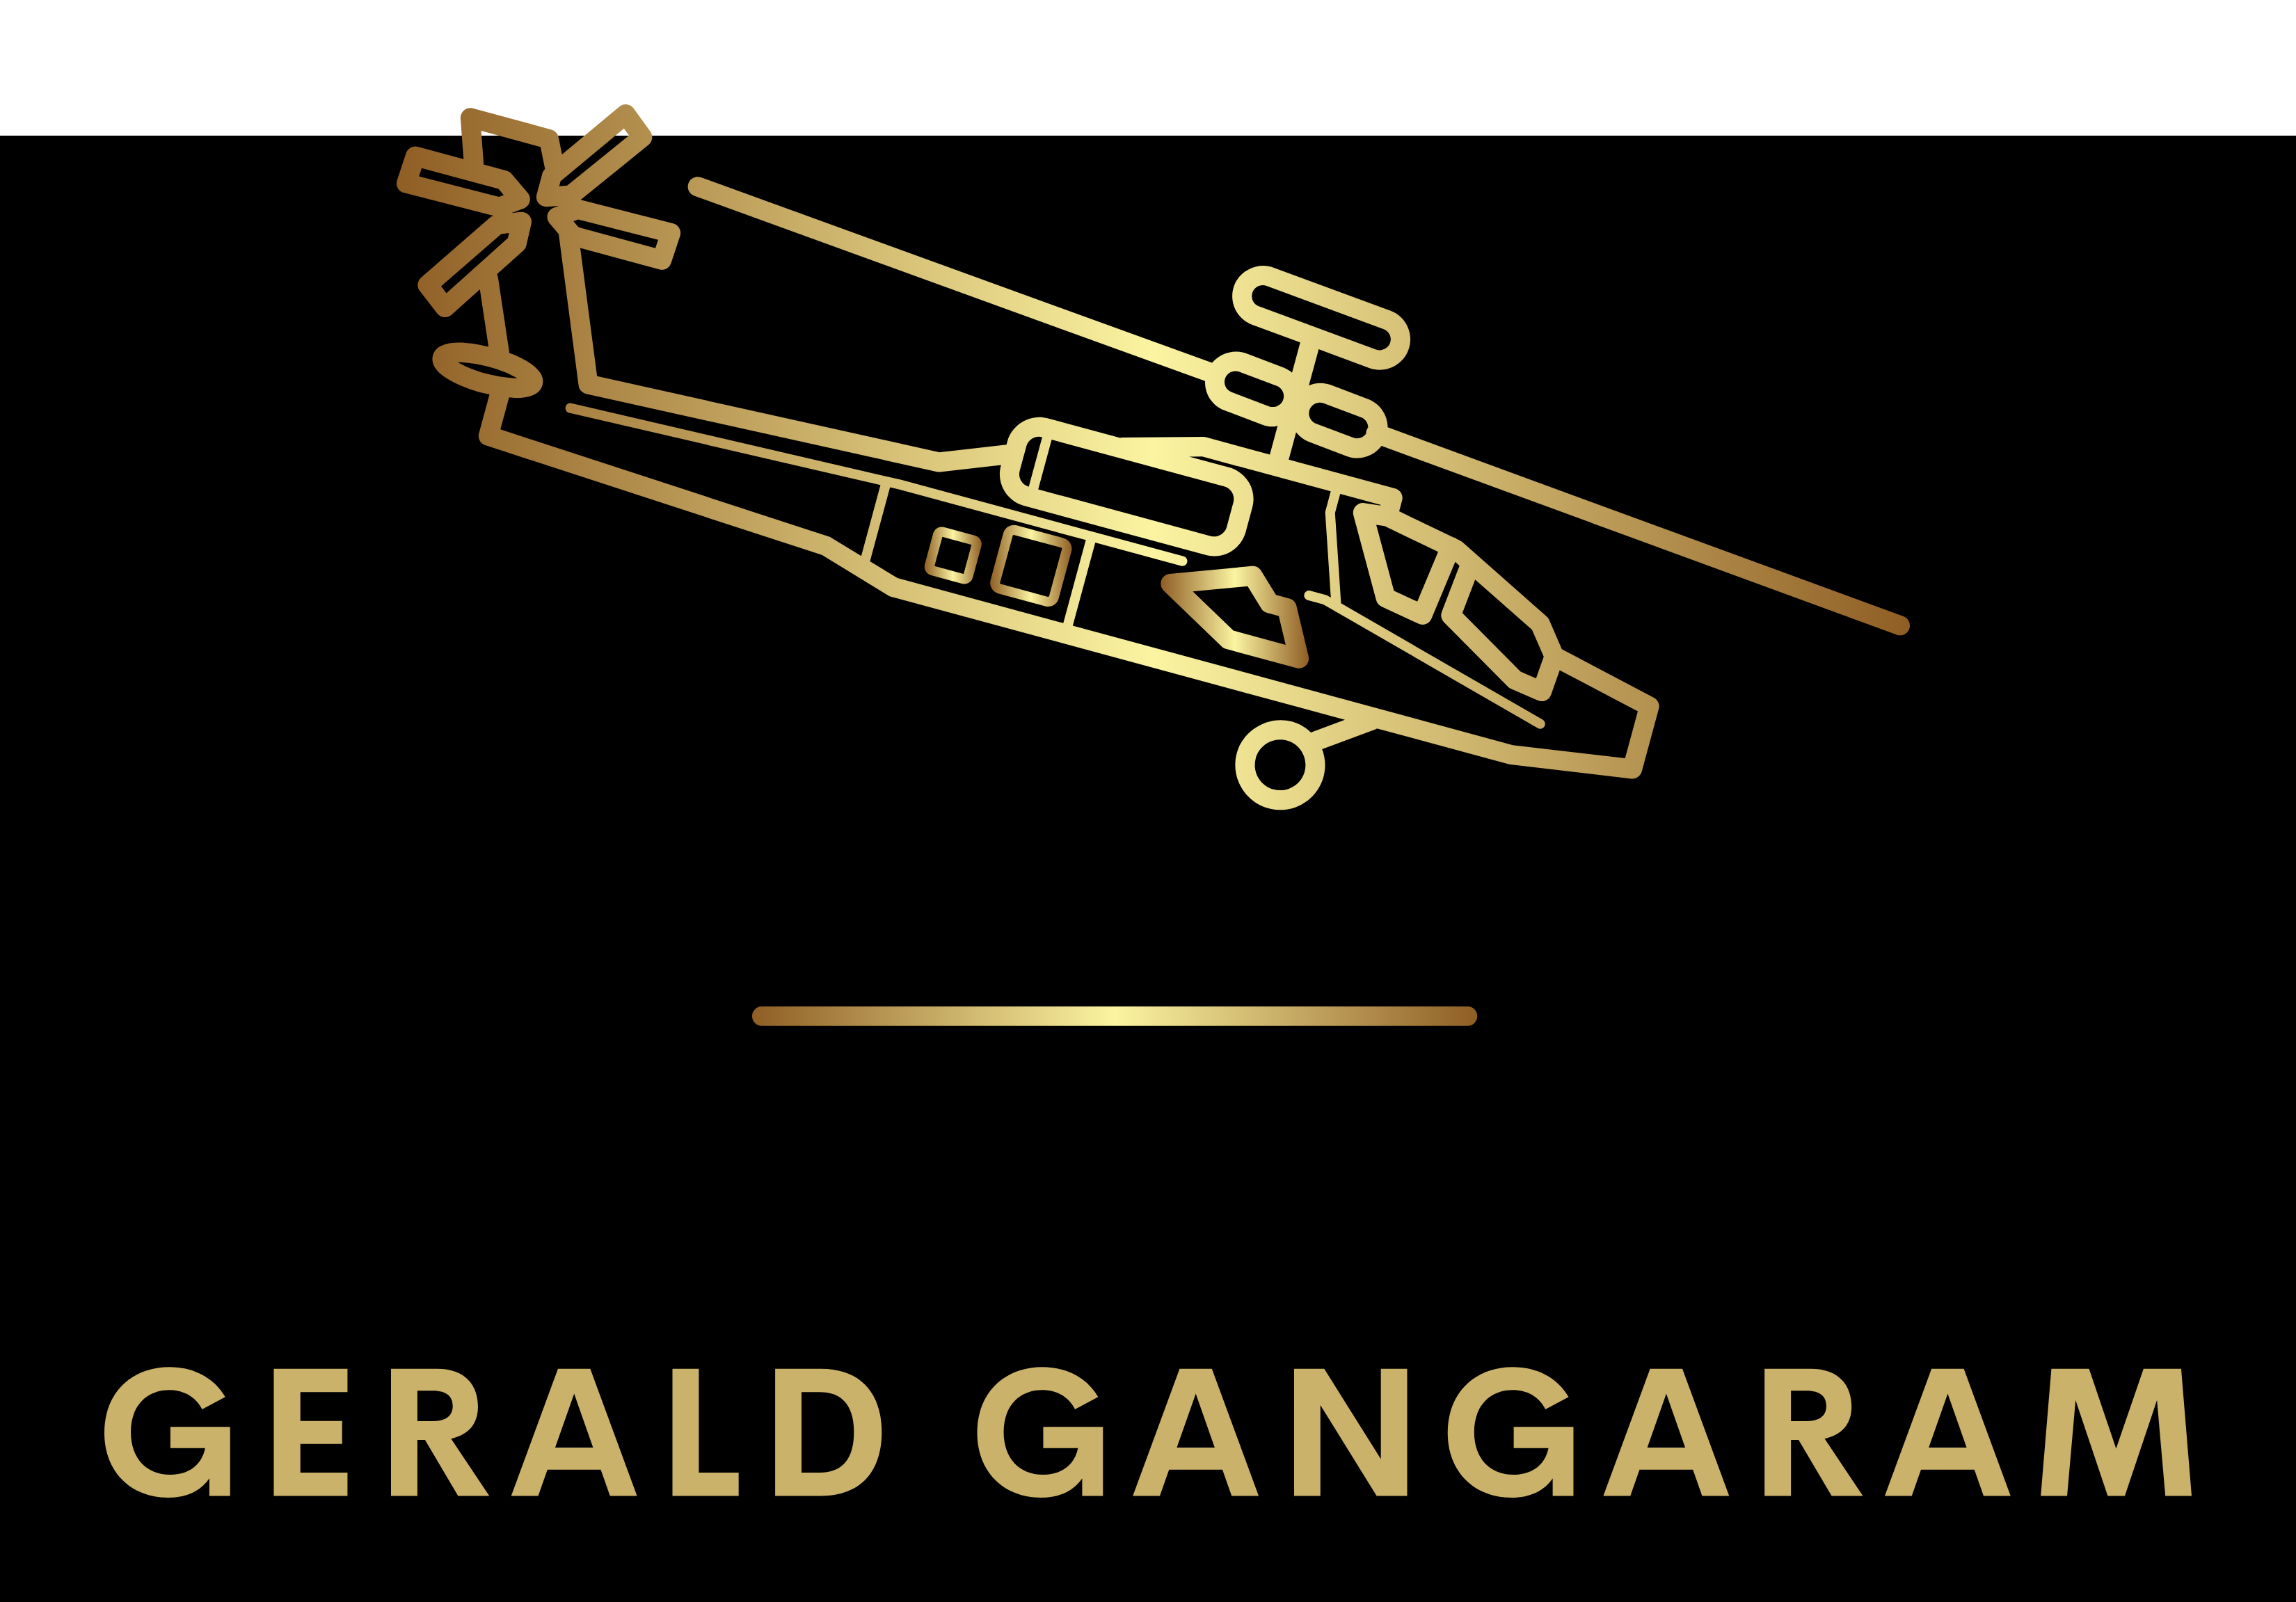 Gerald Gangaram